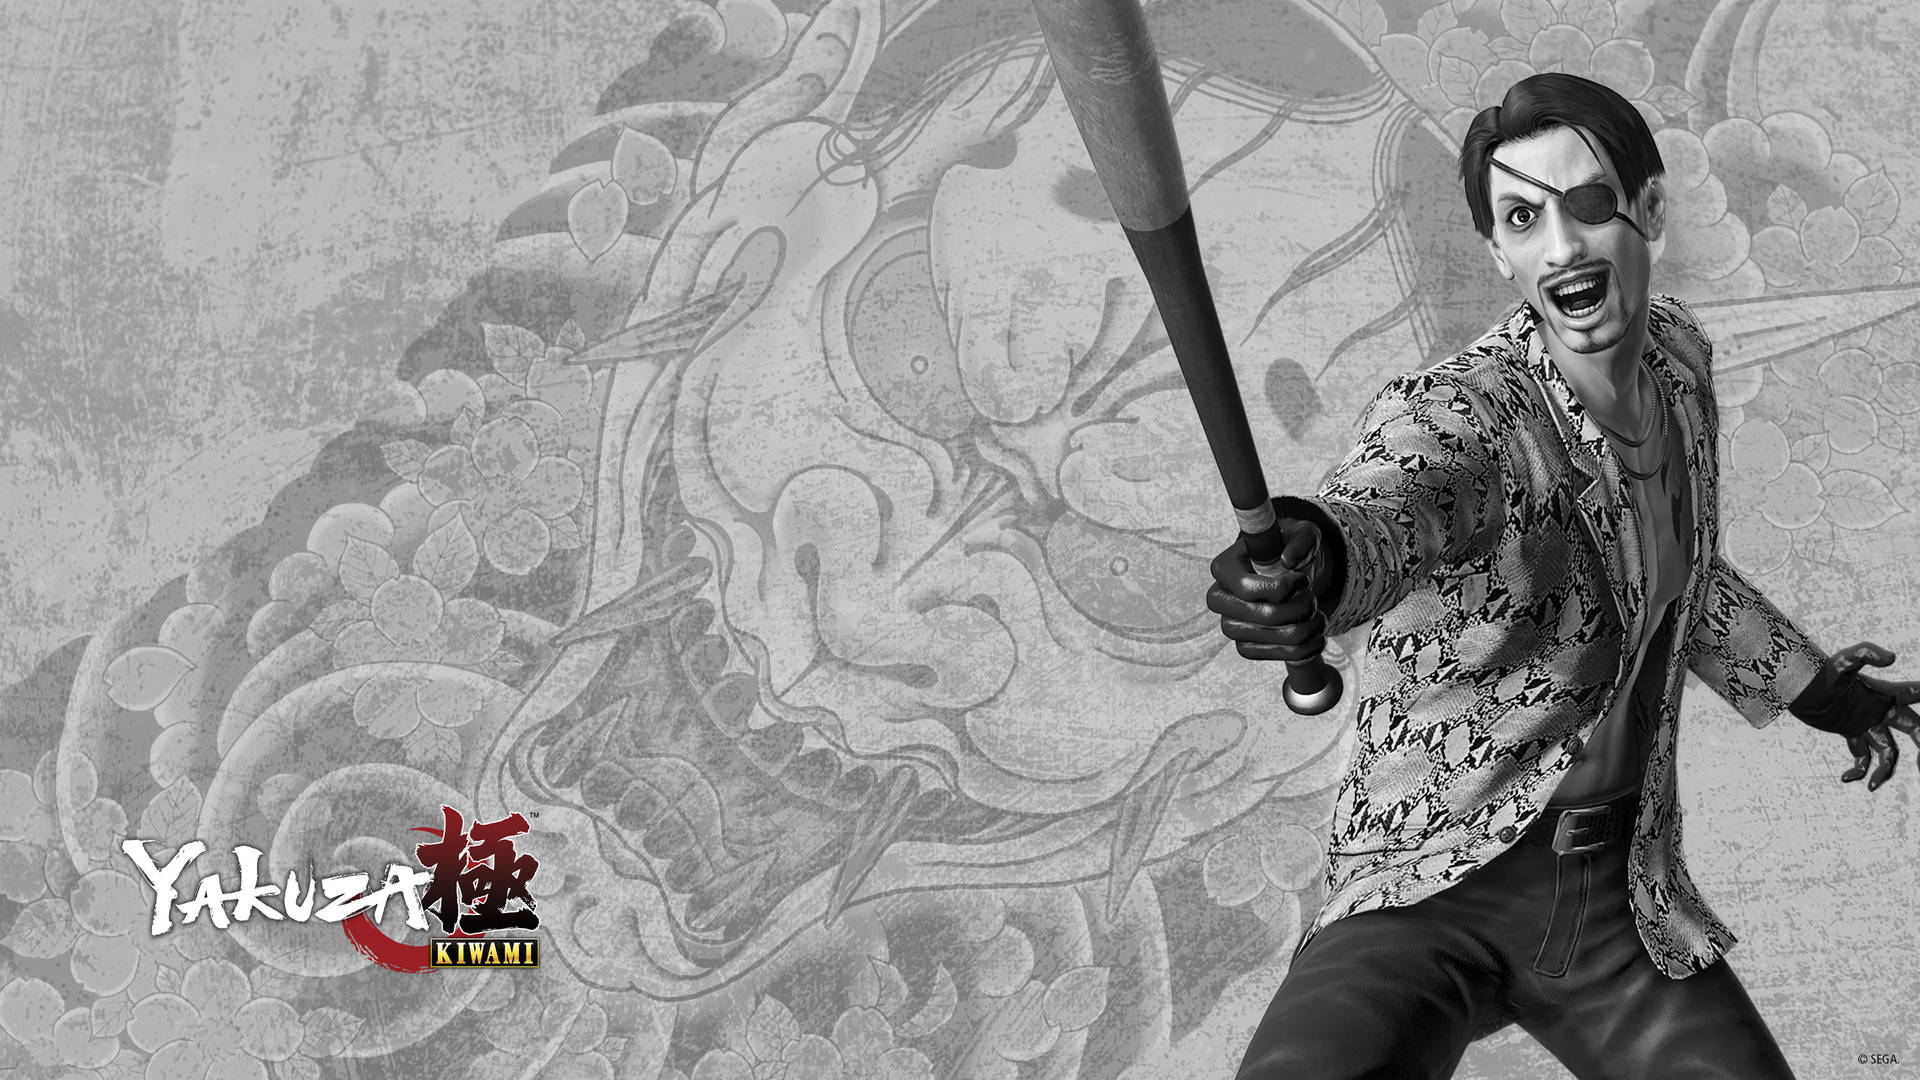 Majima Goro, en yakuza-gangster, dominerer denne imponerende tapet. Wallpaper